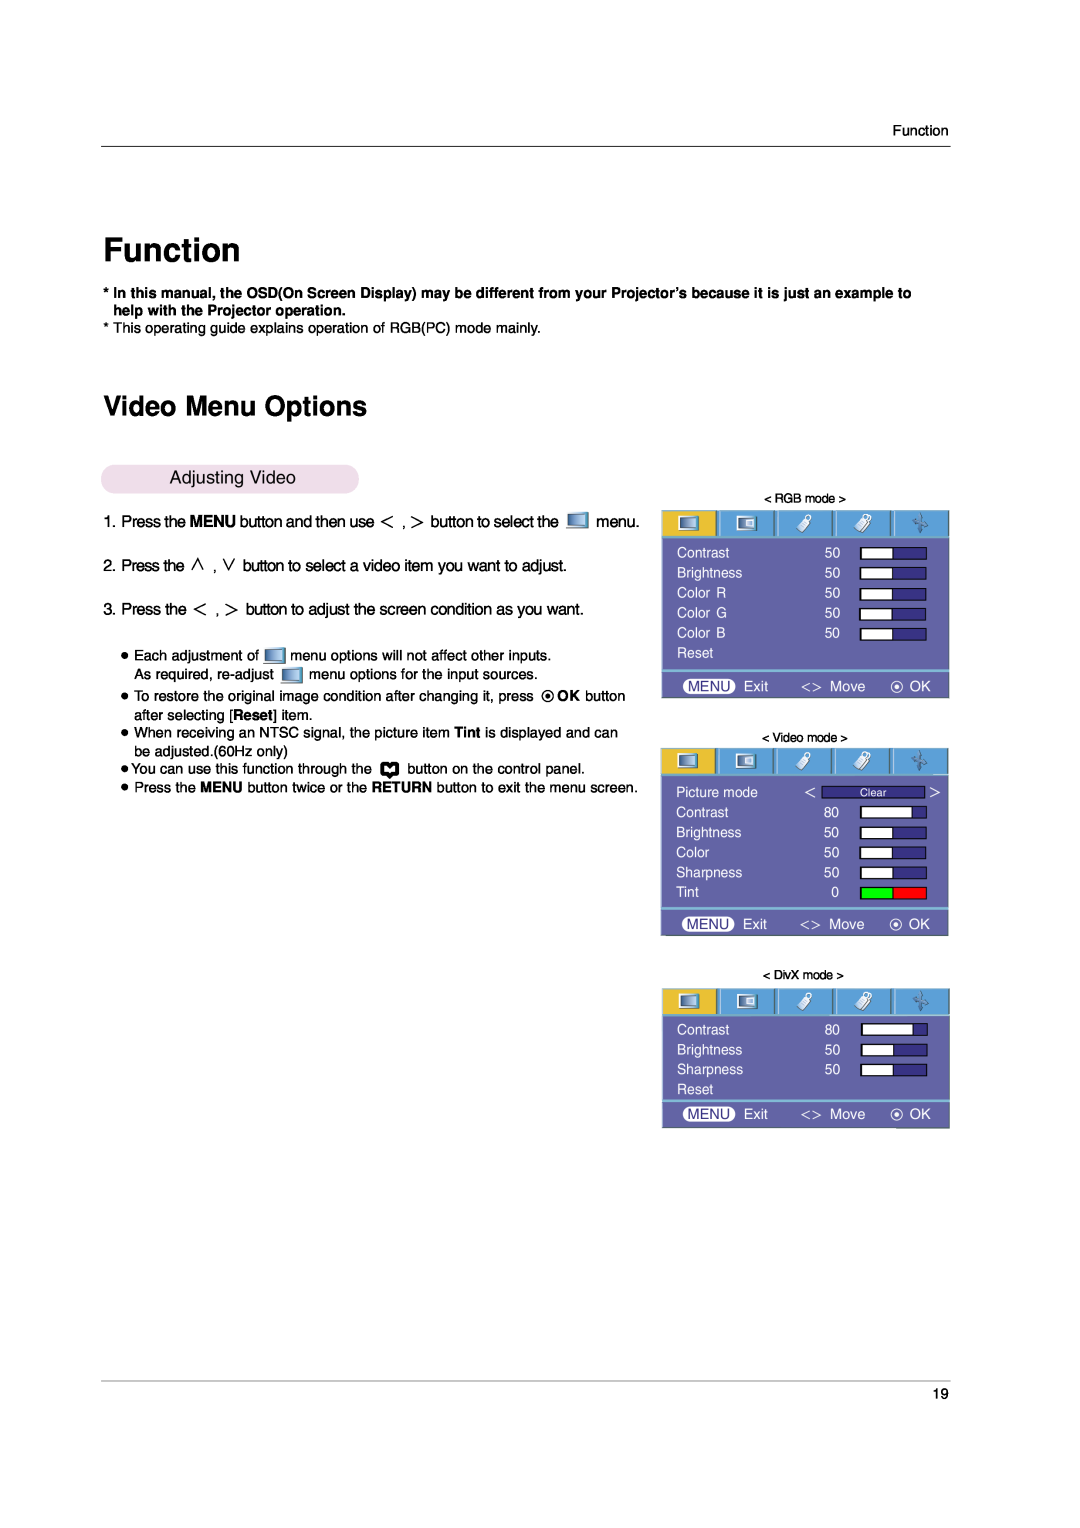 LG Electronics HS102 Function, Video Menu Options, Adjusting Video, Press the MENU button and then use, menu, MENU Exit 